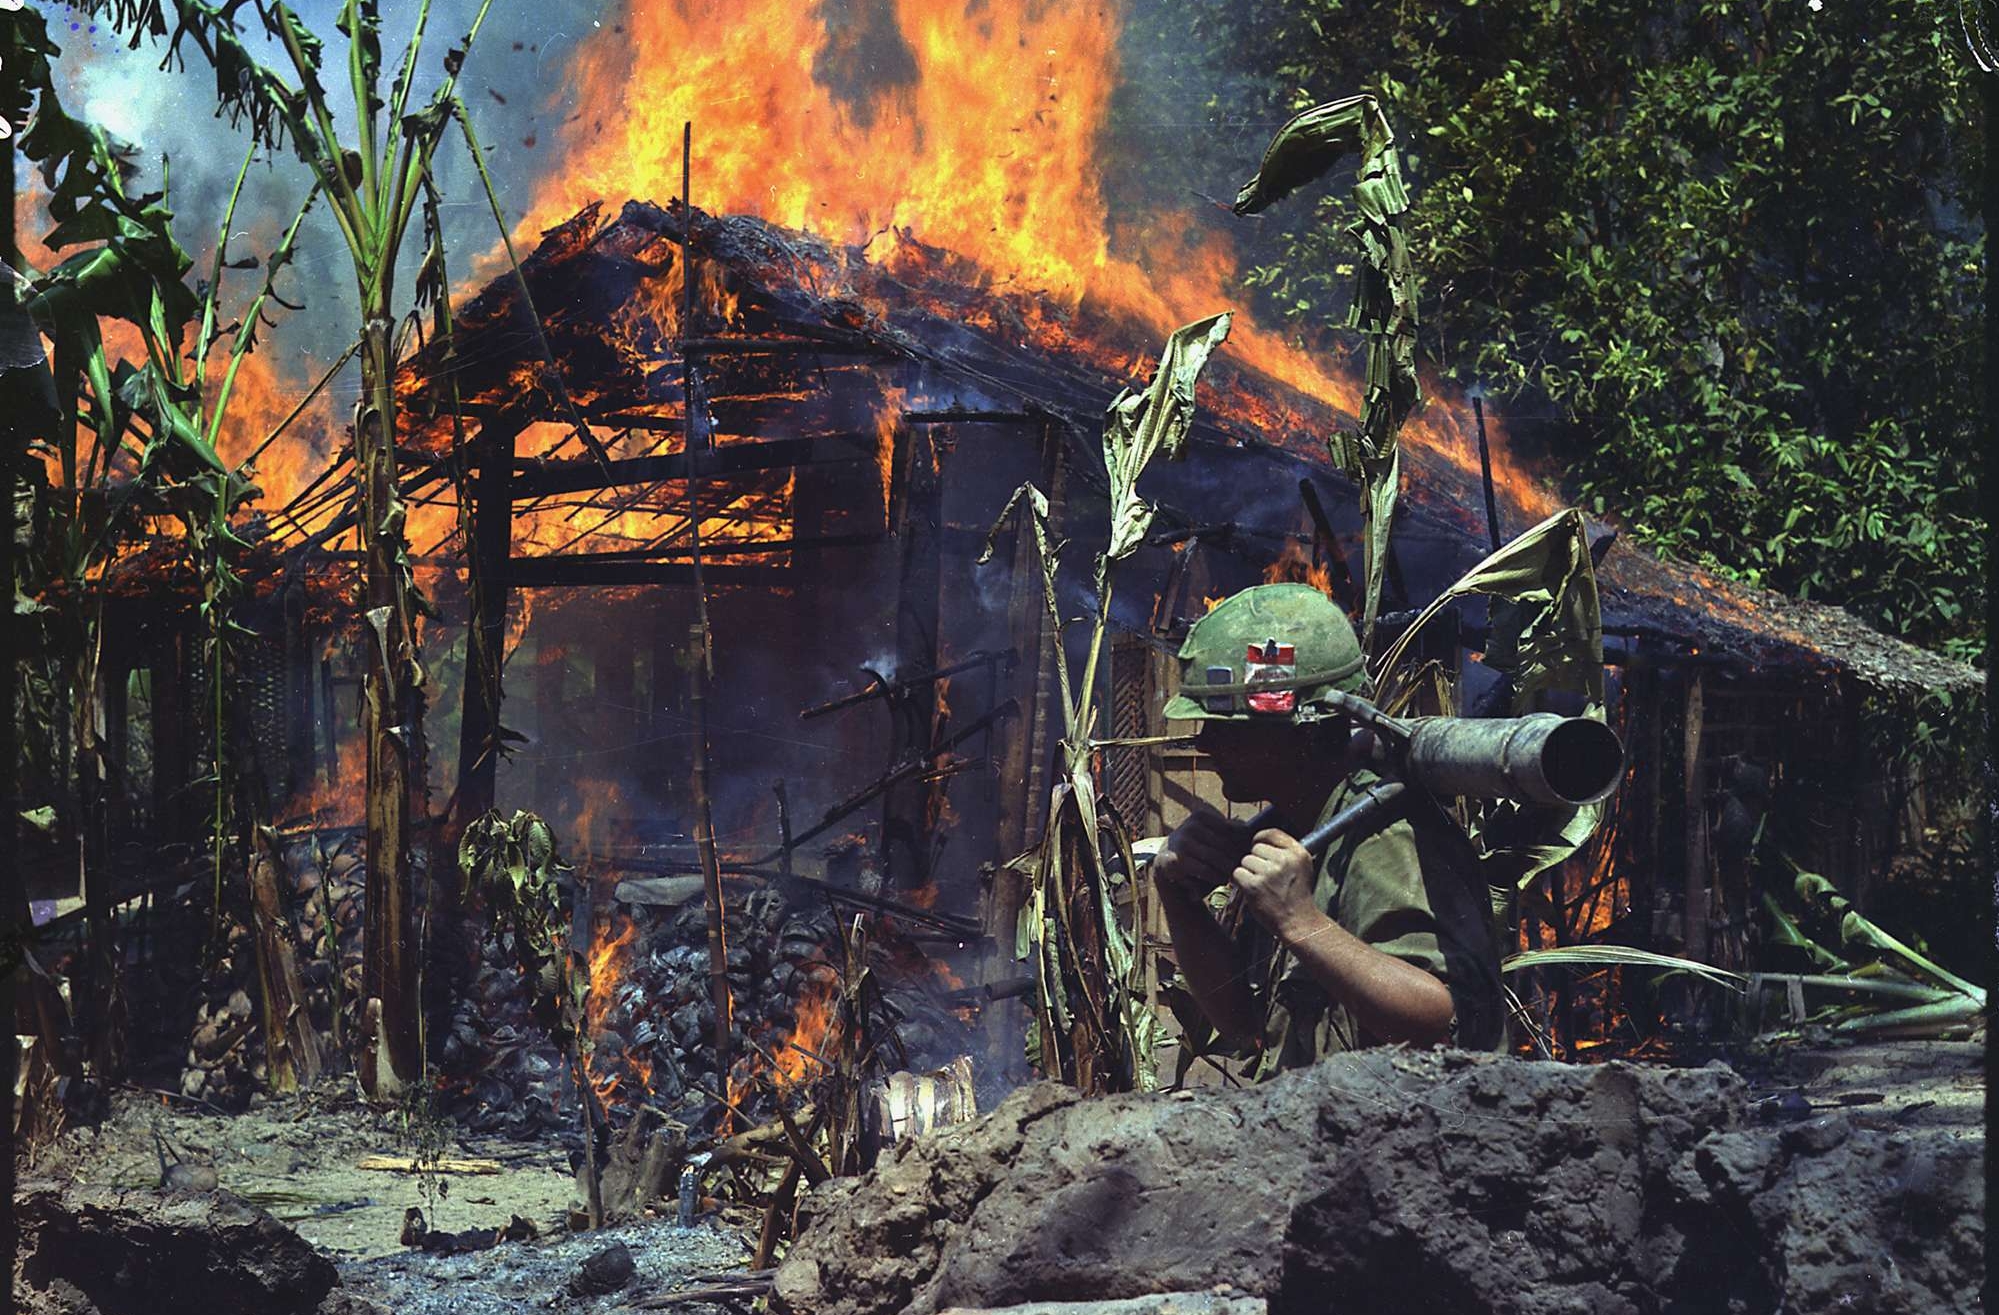 A Viet Cong Base Camp Burning